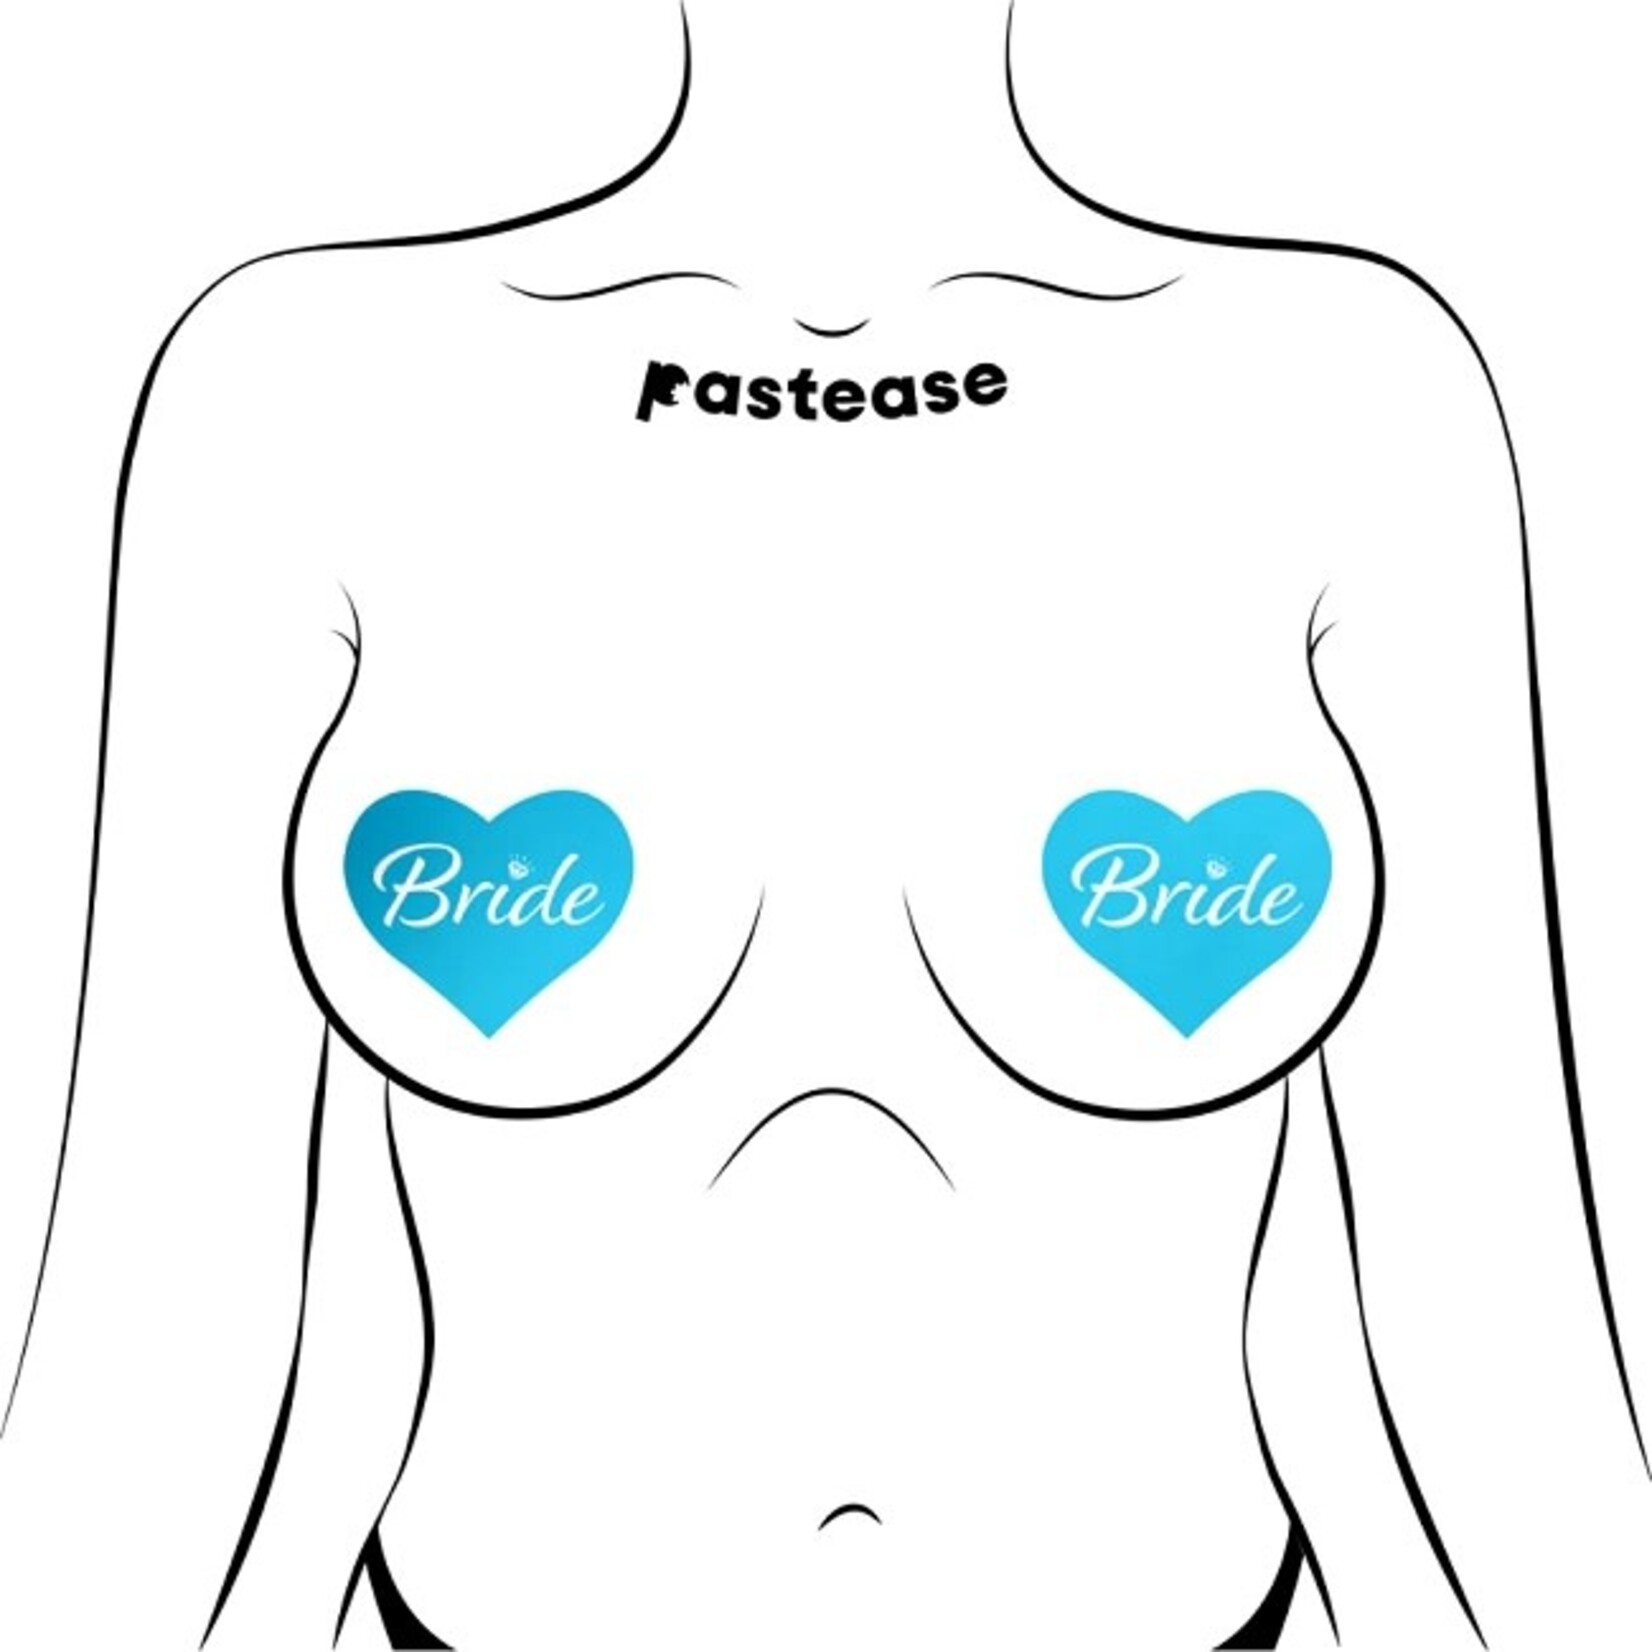 Pastease Pastease Robin's Egg Blue 'Bride' Heart Nipple Pasties